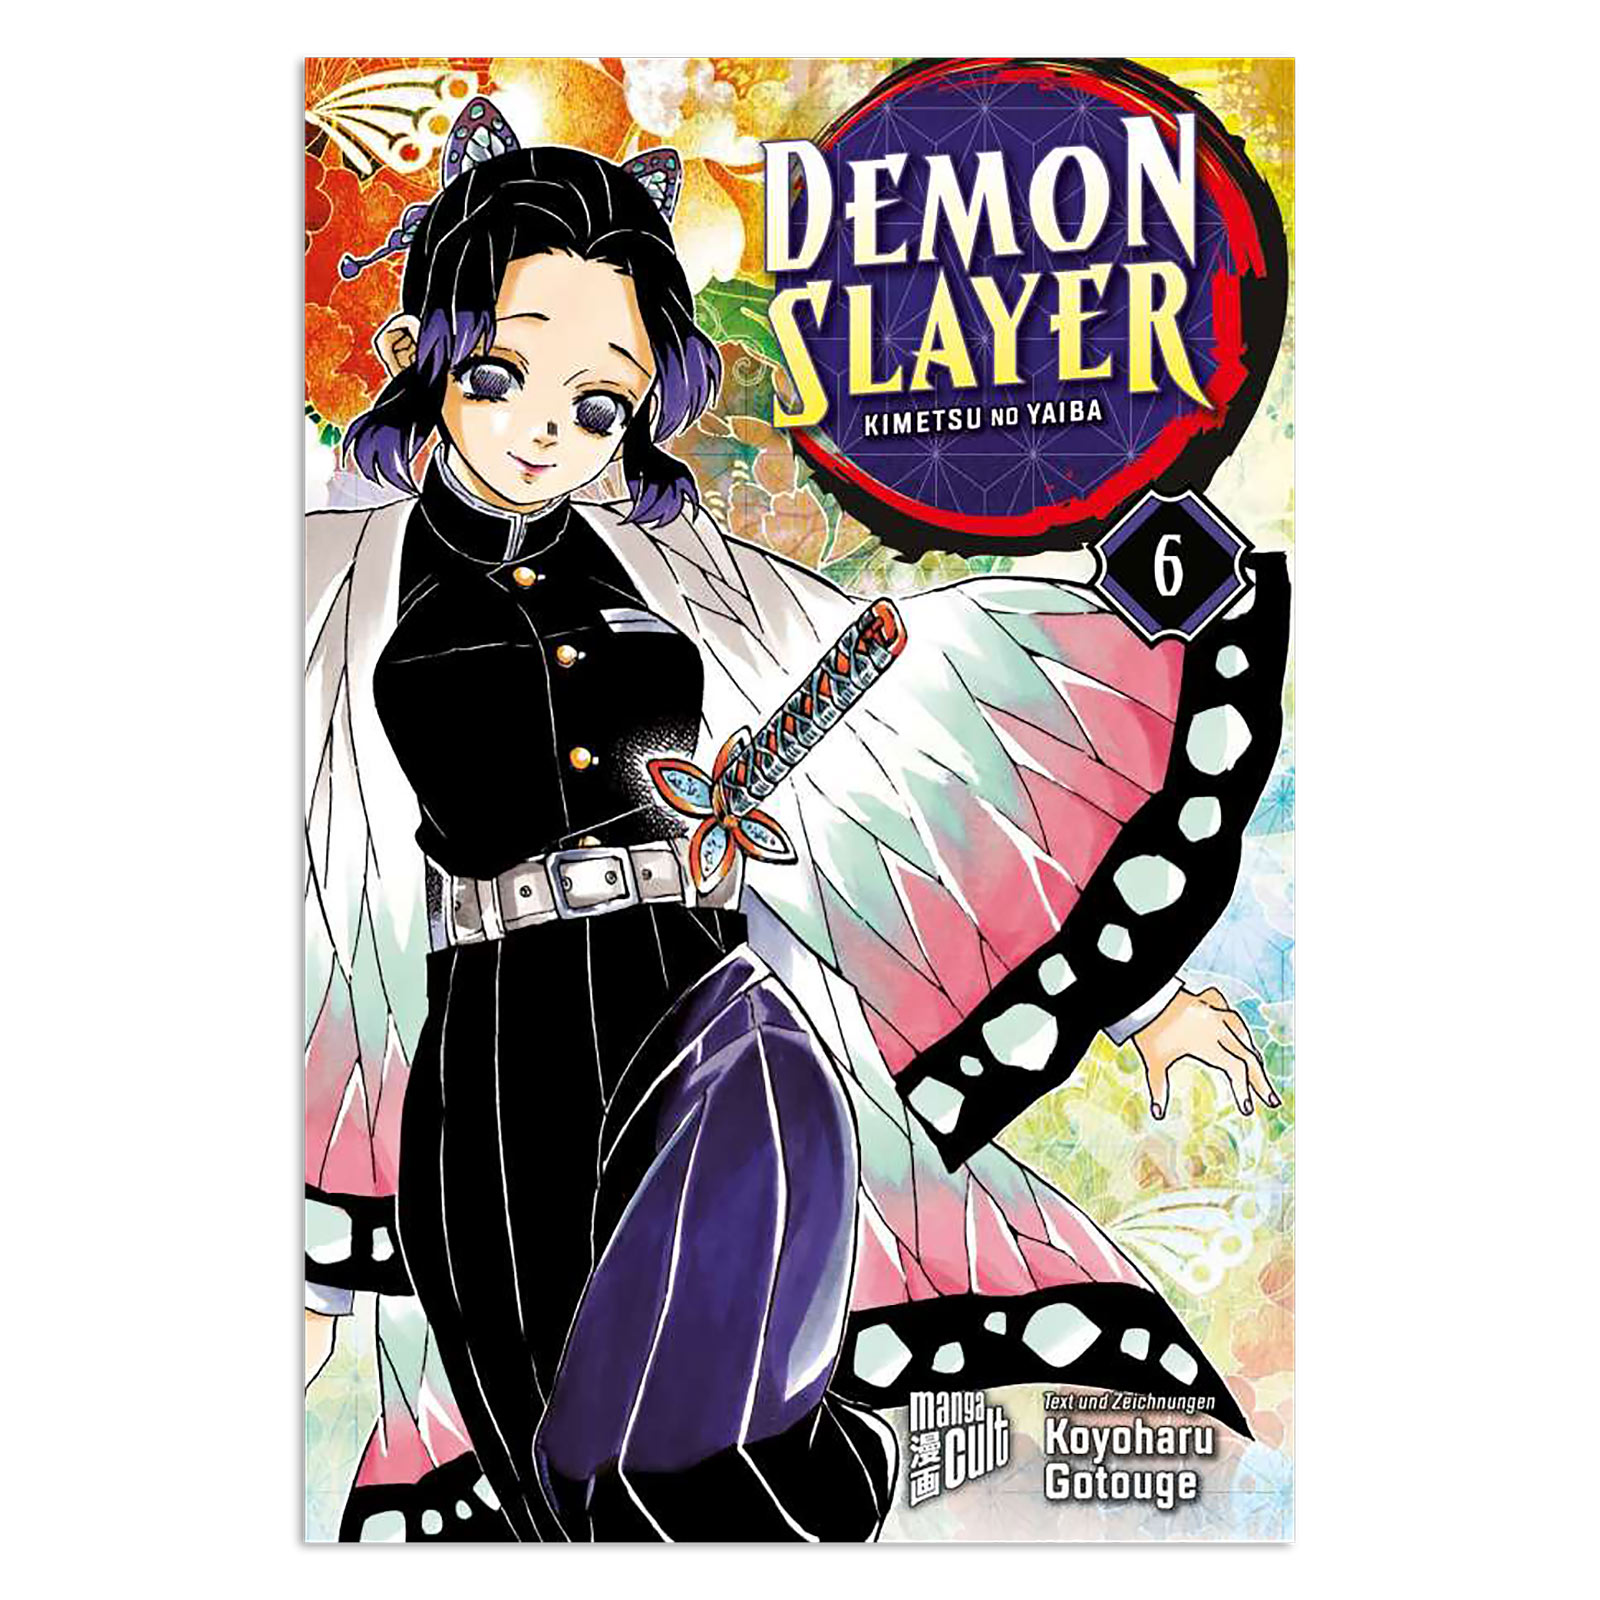 Demon Slayer - Kimetsu no yaiba Volume 6 Paperback